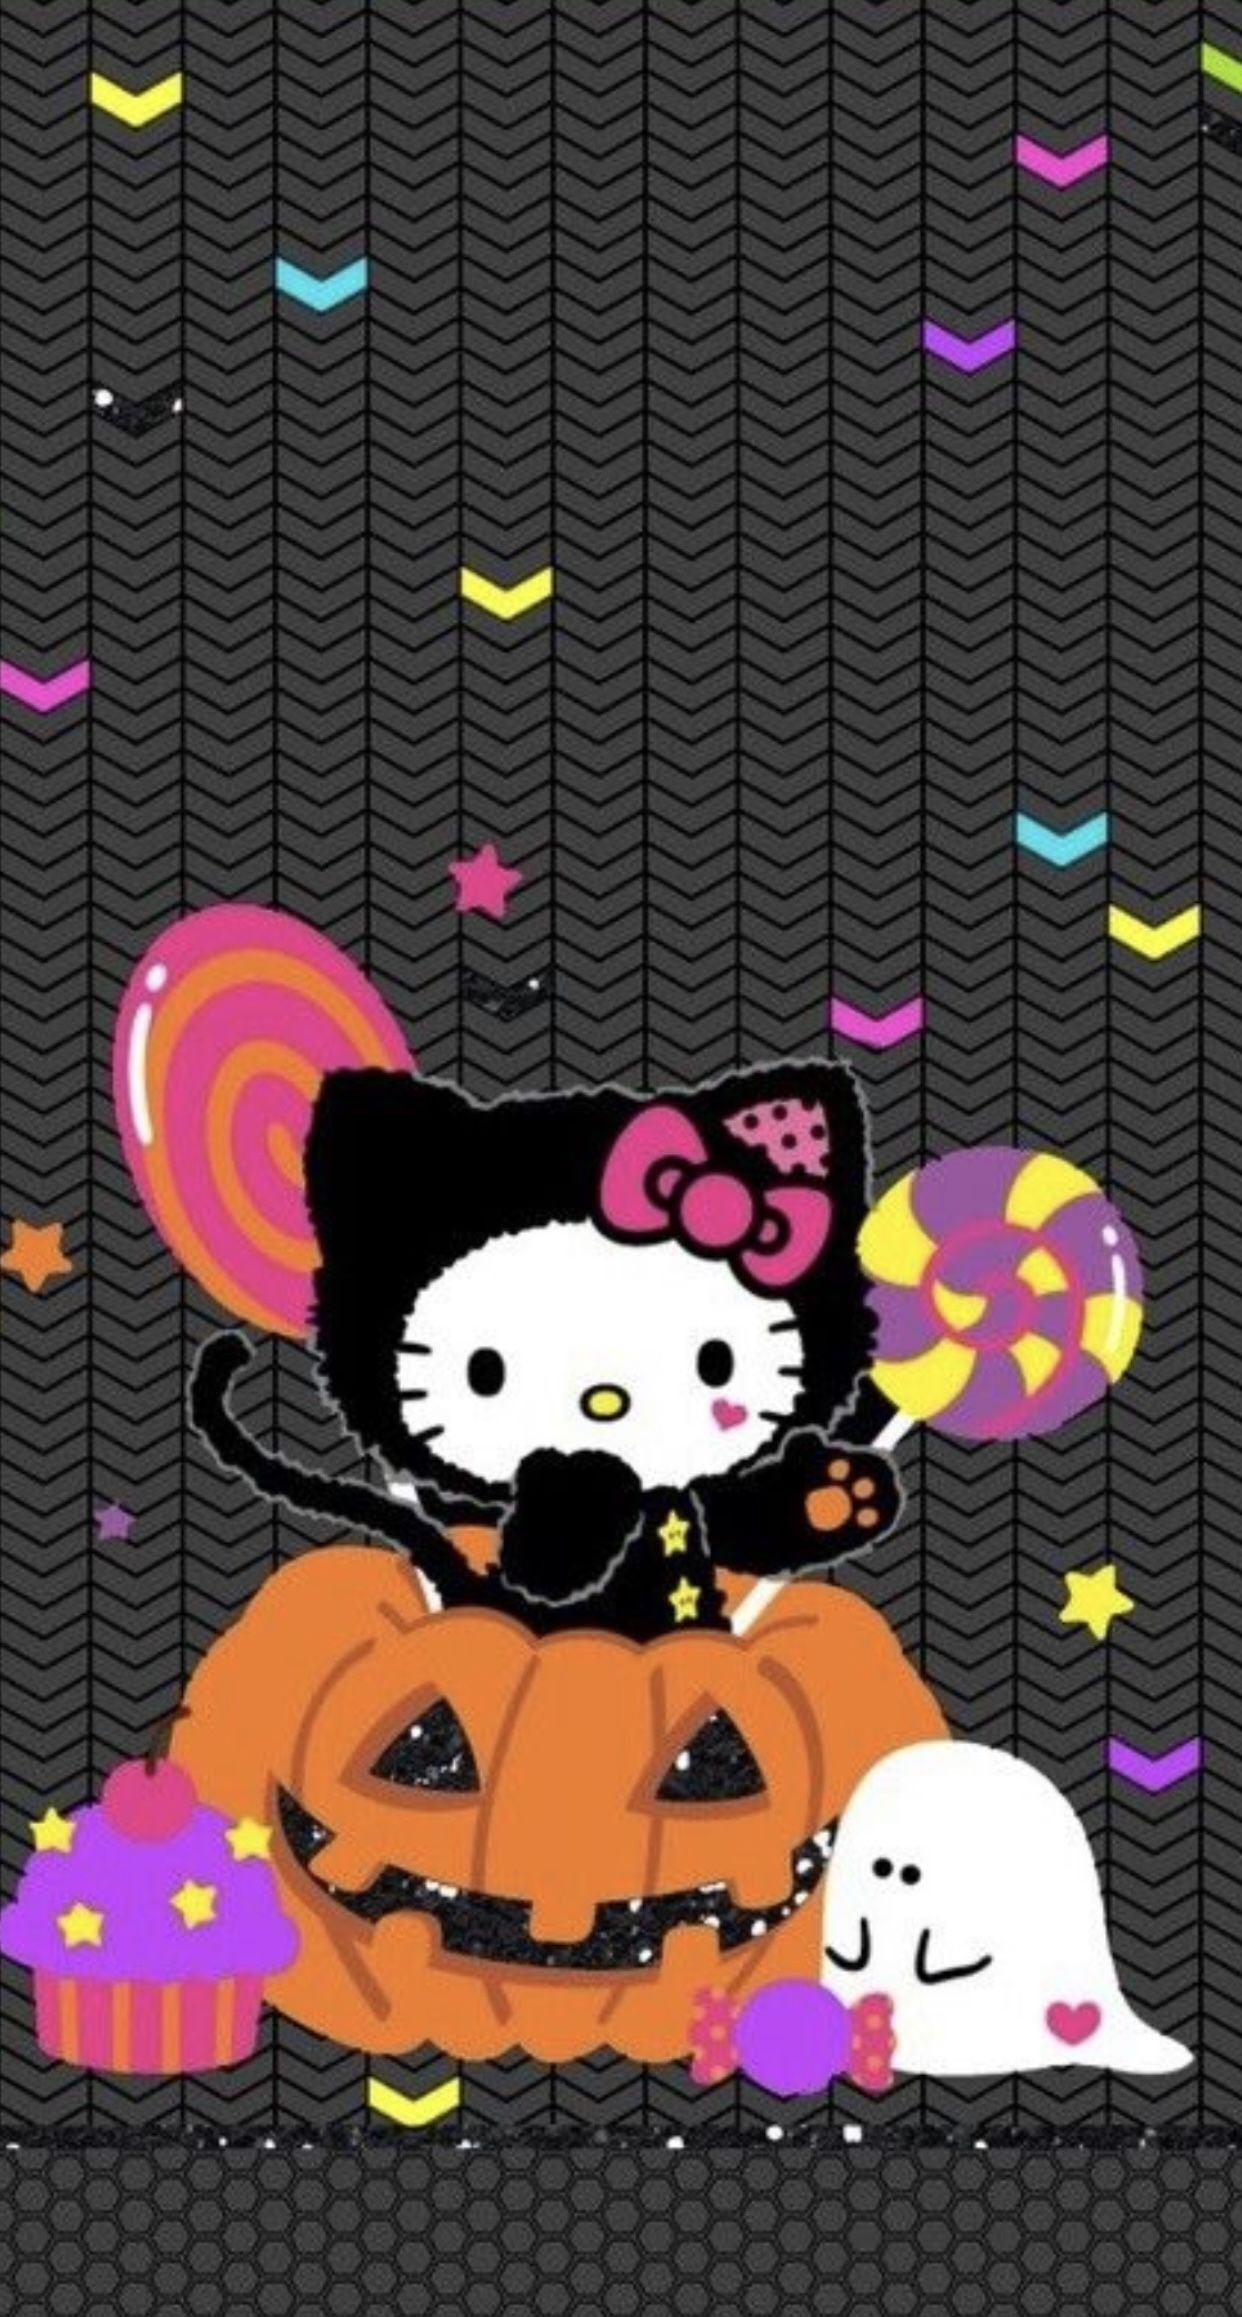 Hello Kitty Wallpaper Cute